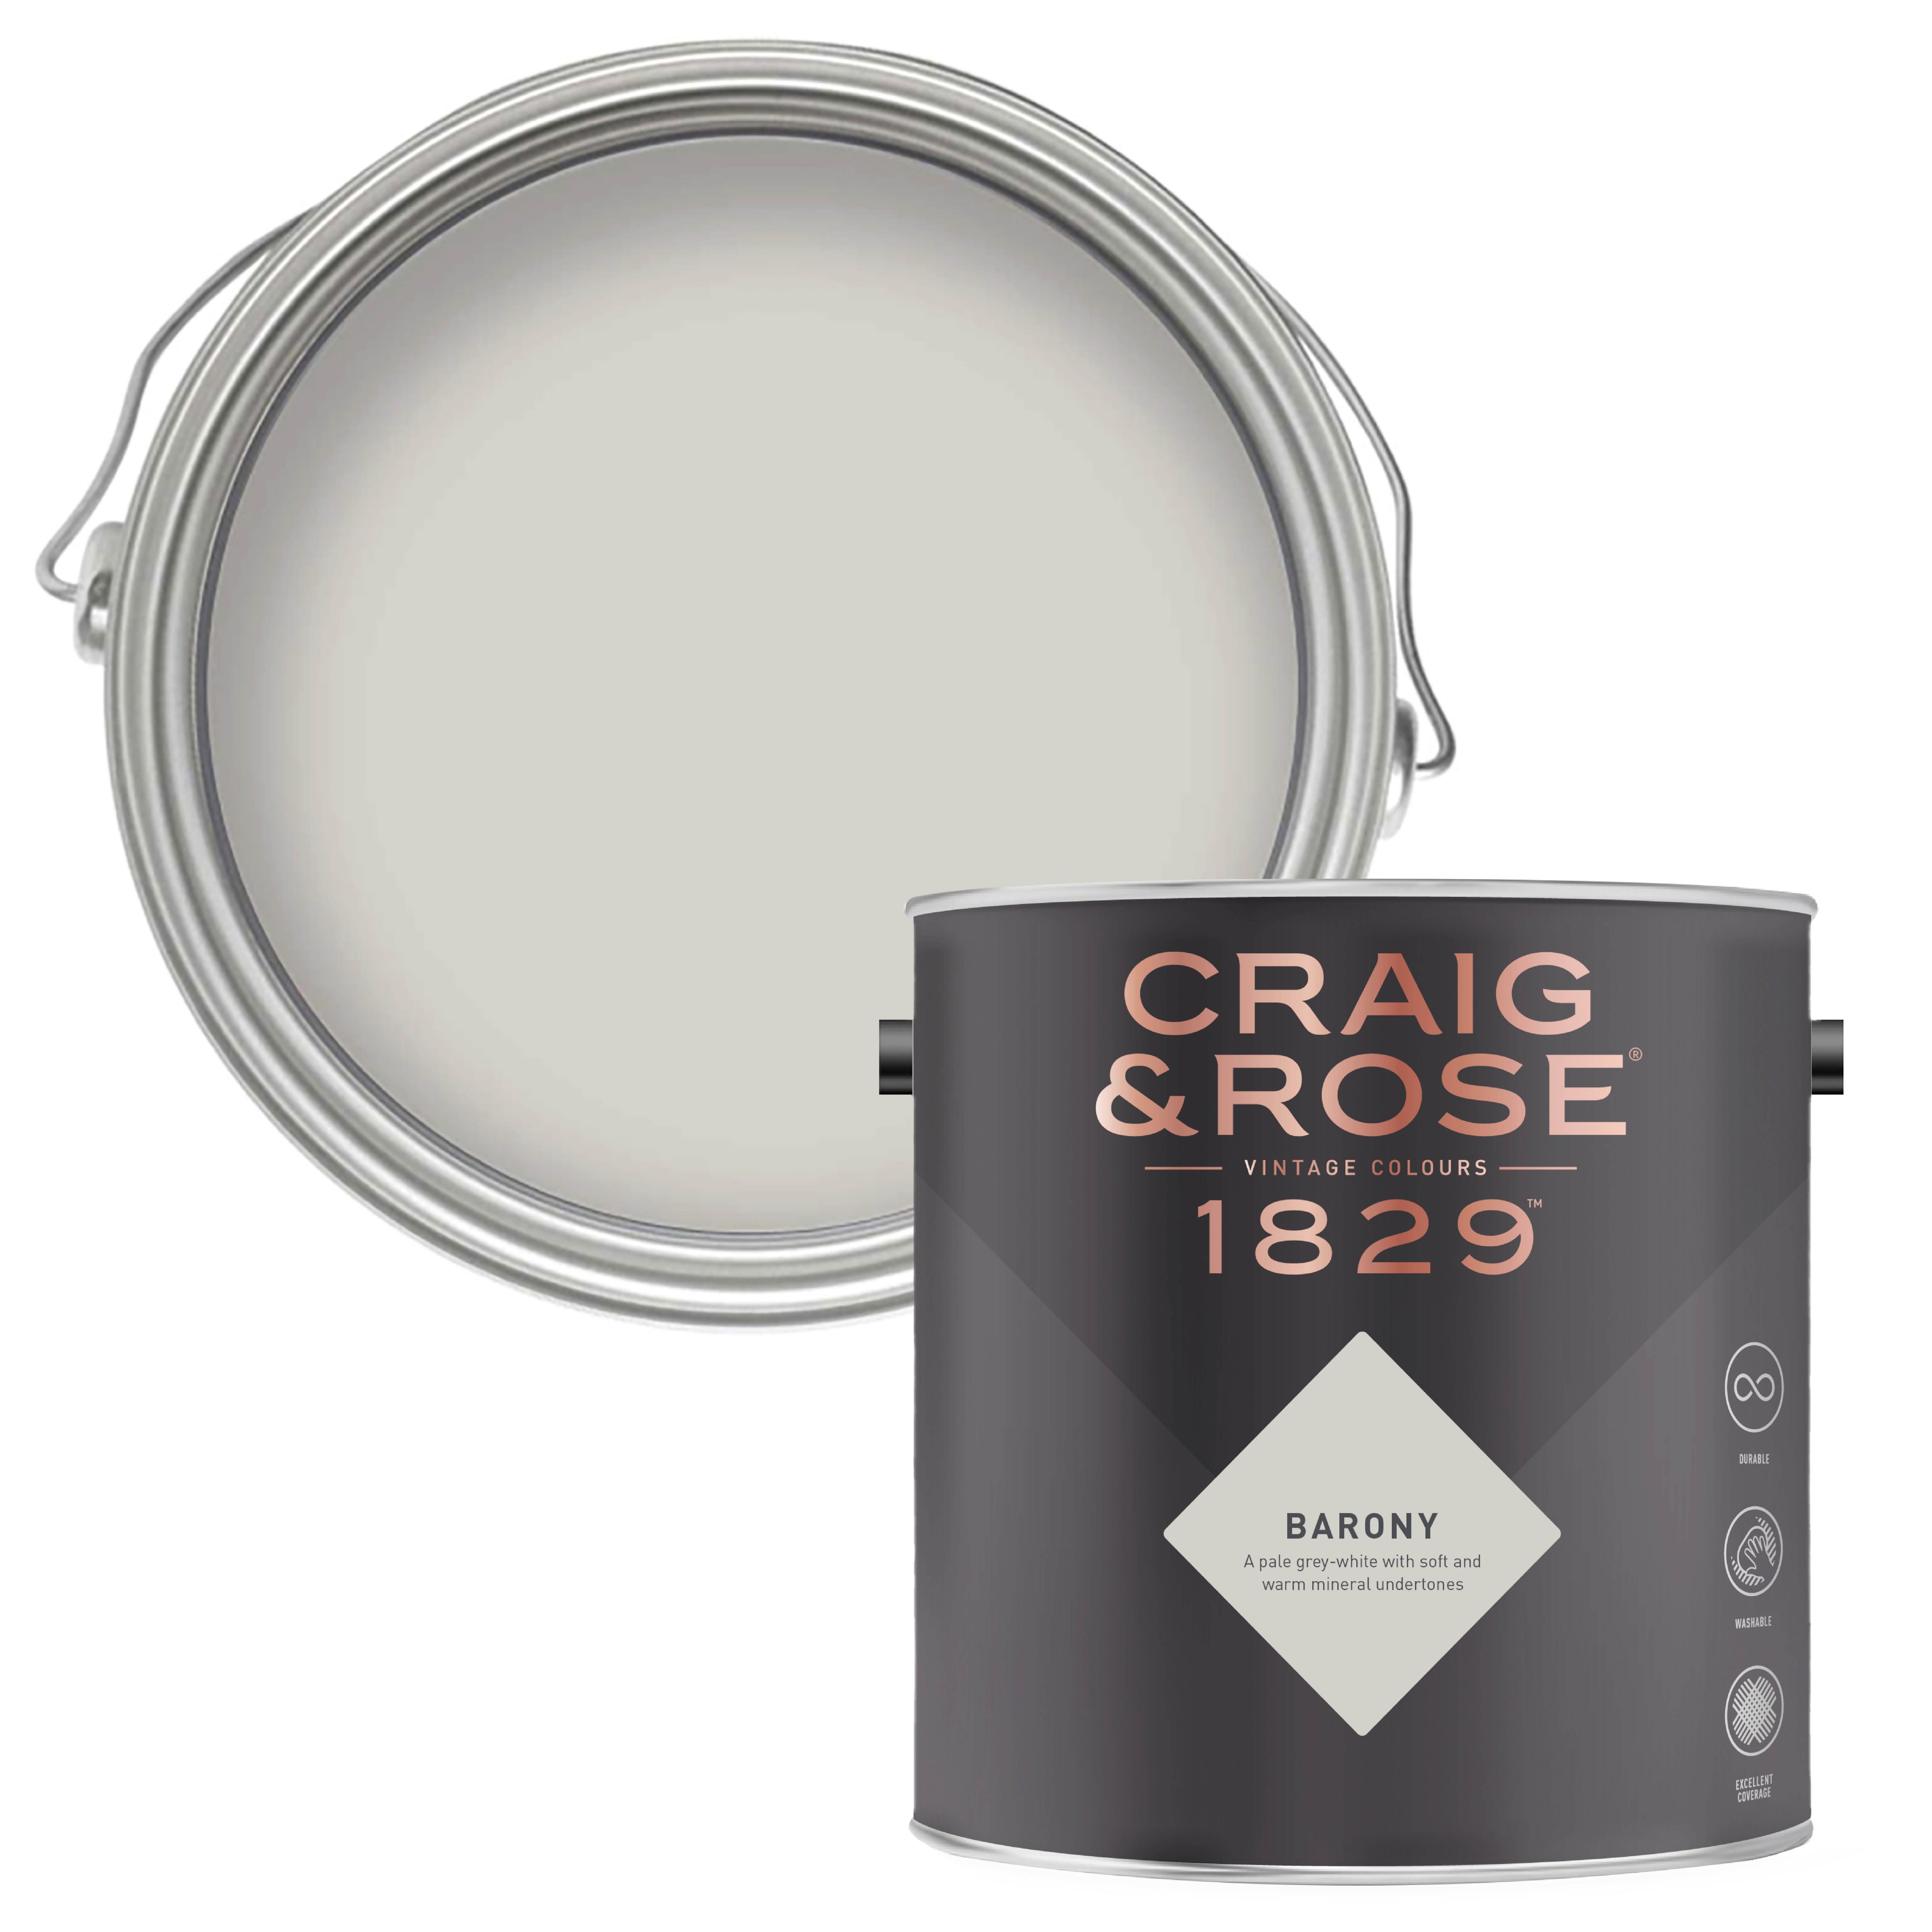 Craig & Rose 1829 Barony Chalky Emulsion paint, 2.5L